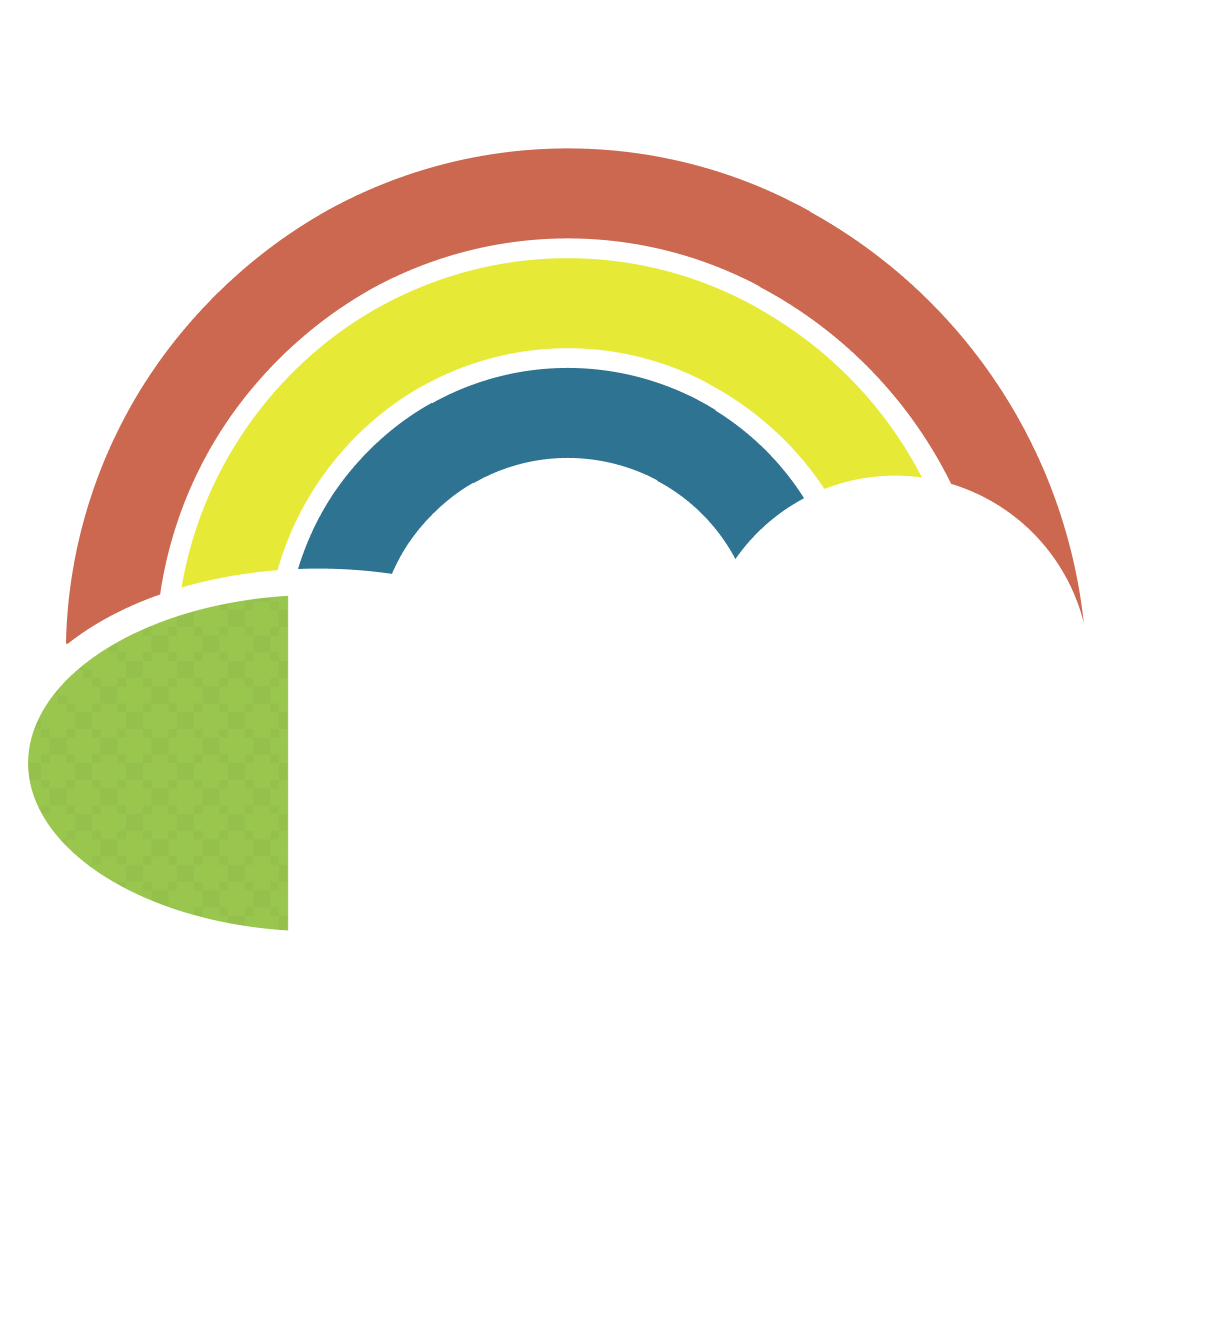 25% identify as LGBTQ+